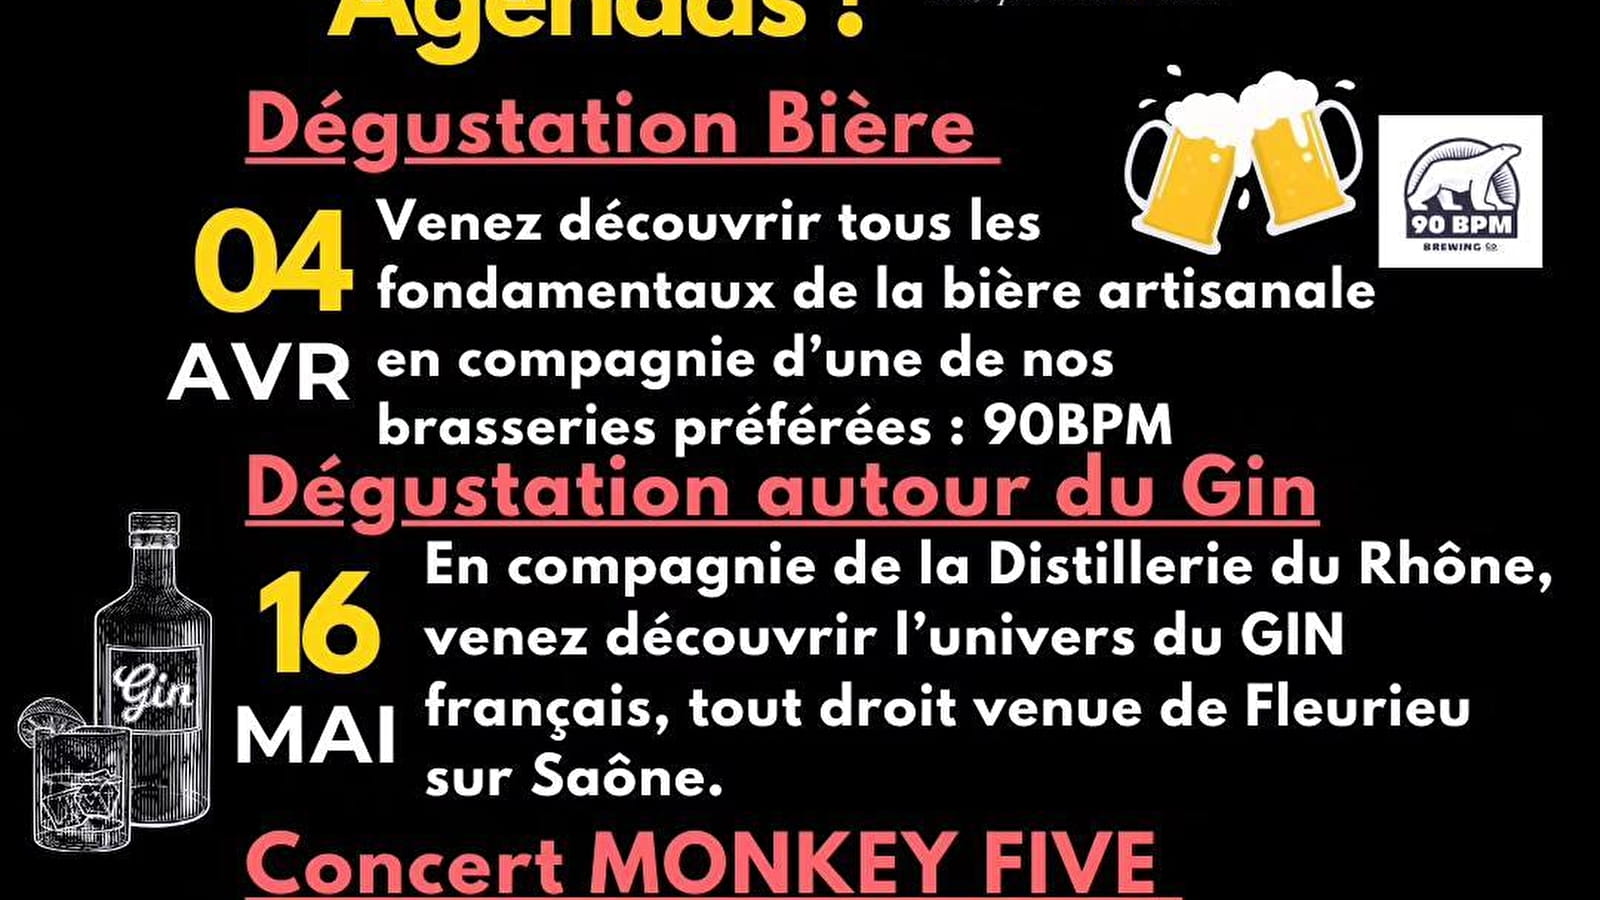 Monkey Five Concert Evening